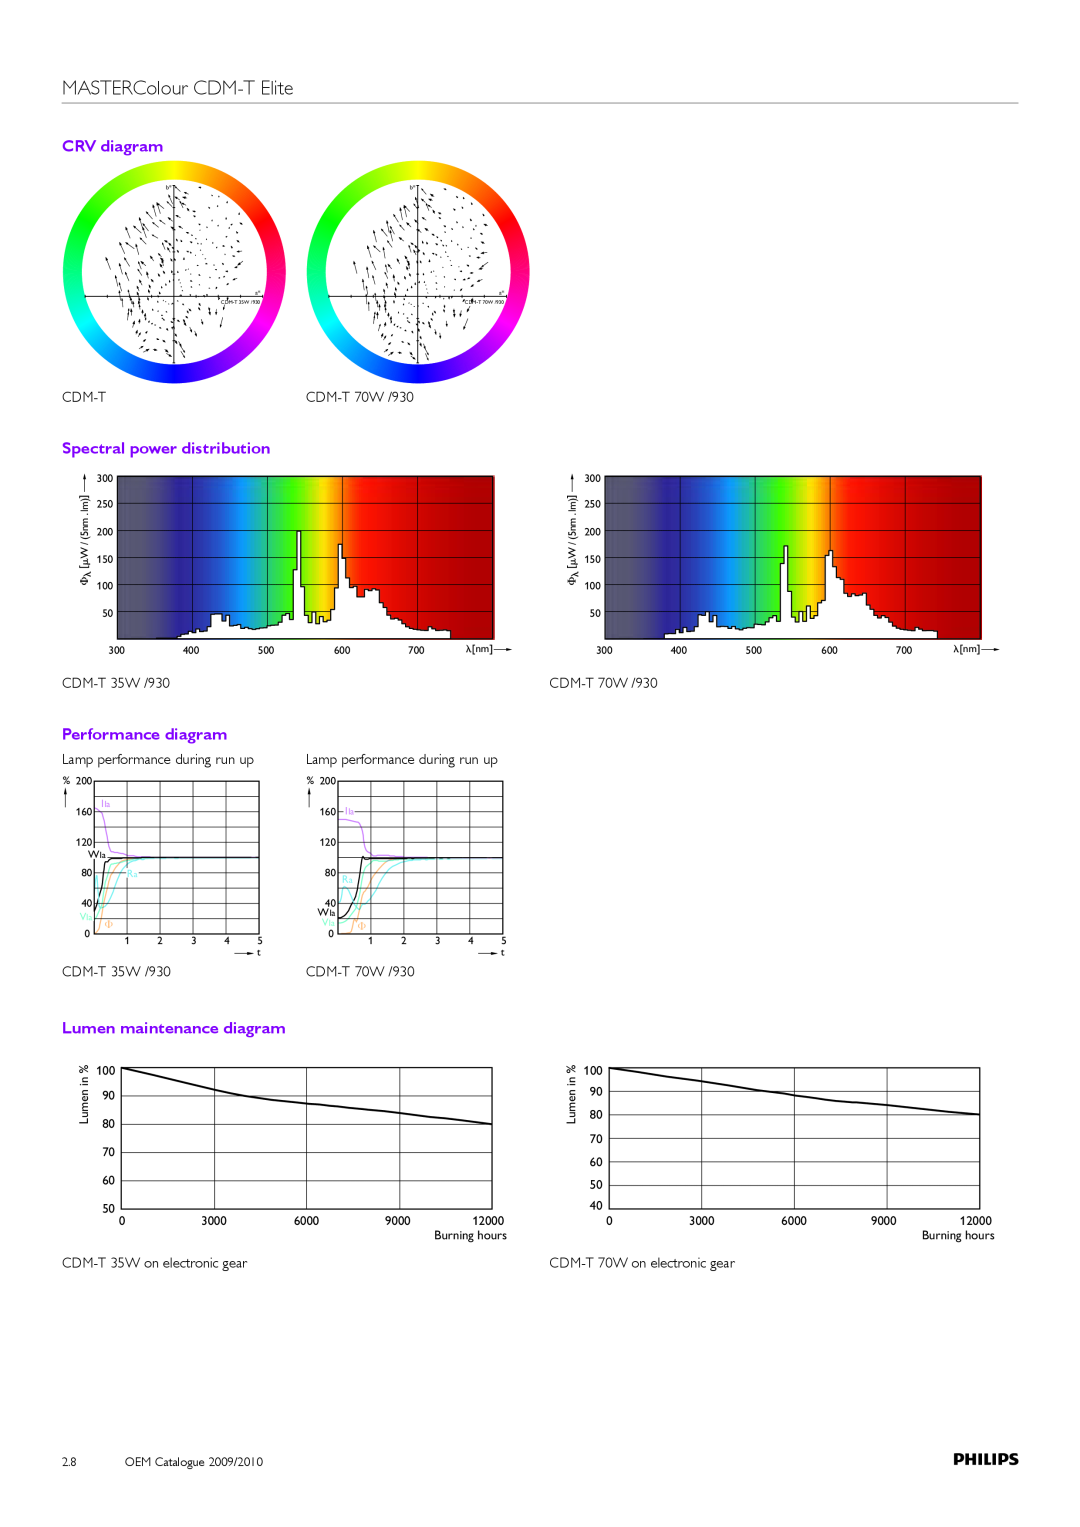 Philips Compact HID Lamp and Gear MASTERColour CDM-TElite, CRV diagram, Spectral power distribution, Performance diagram 